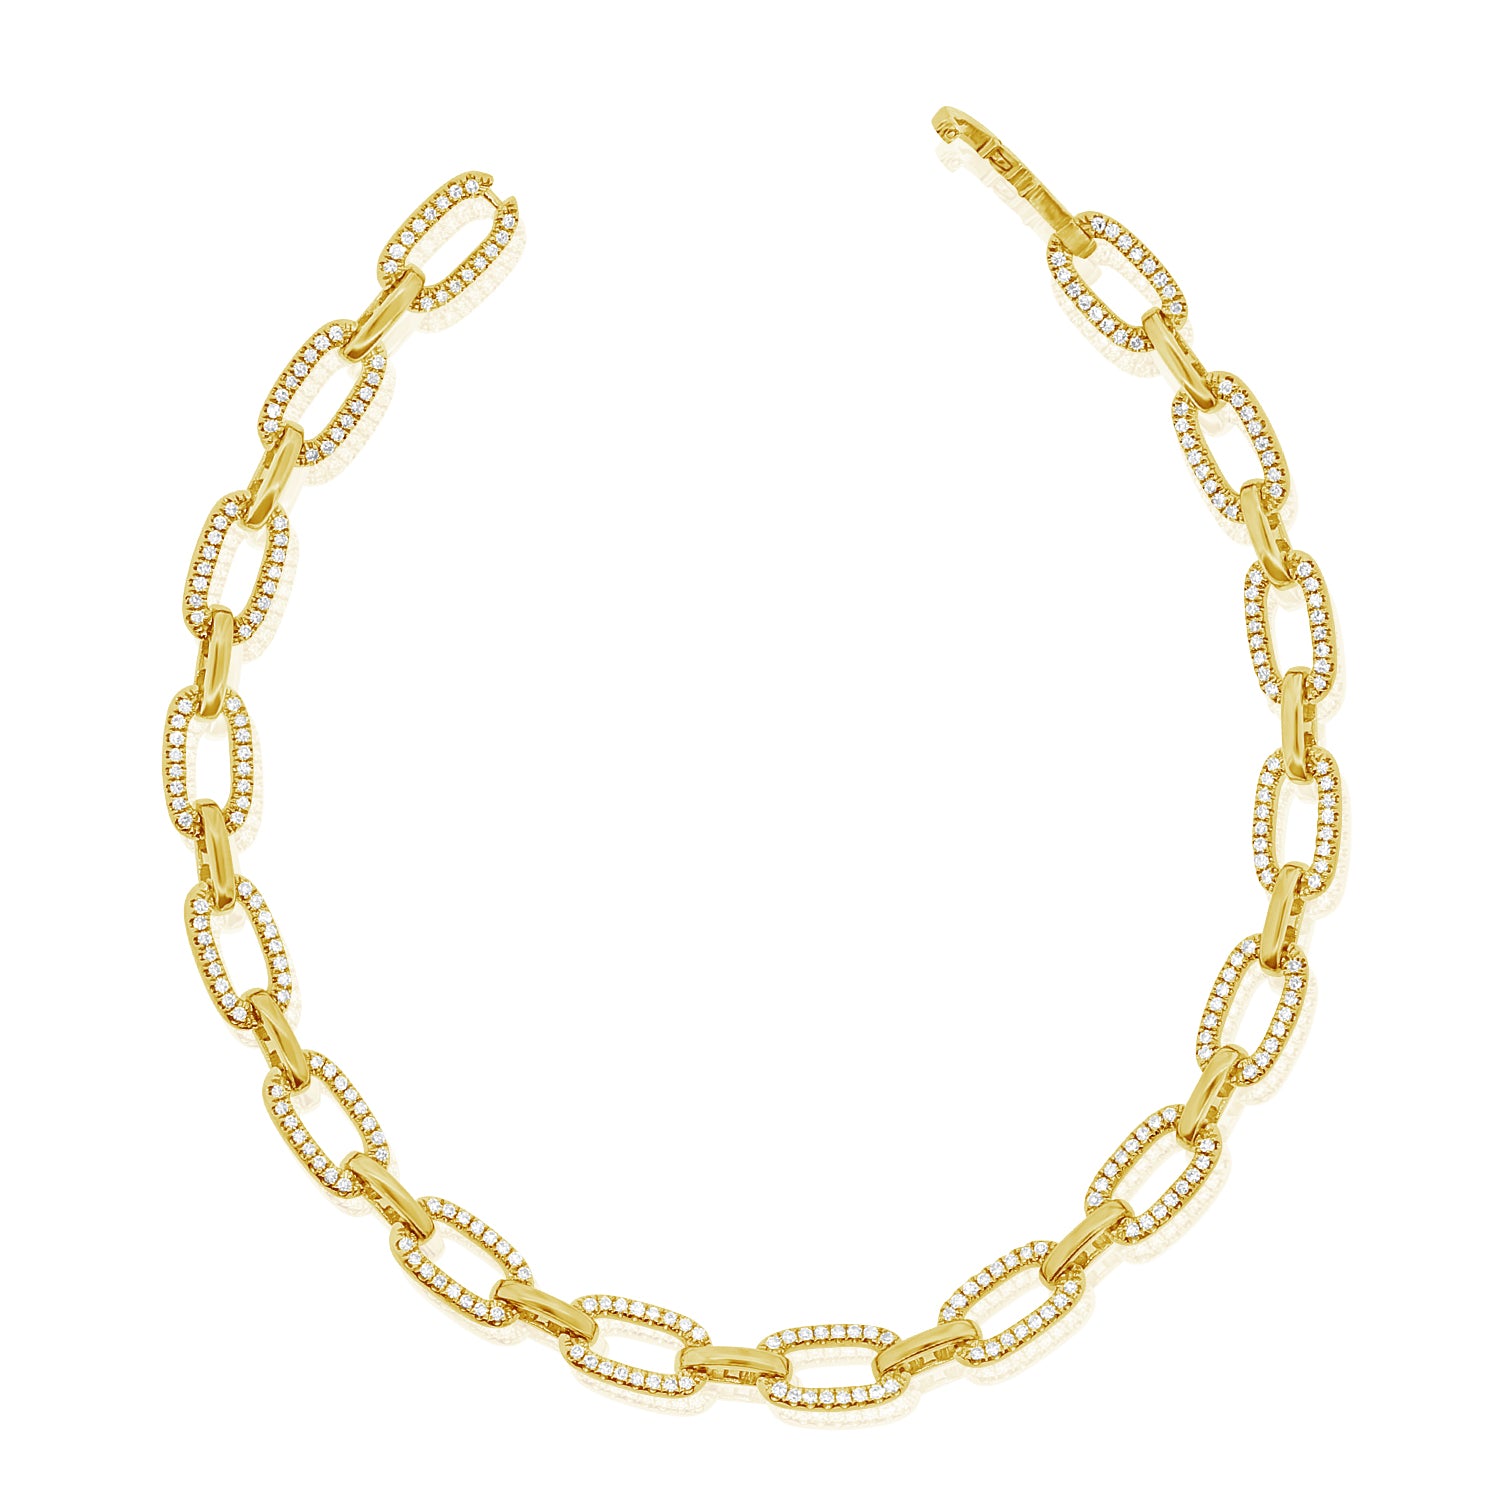 Diamond Chain Link Bracelet - 14K yellow gold weighing 9.25 grams - 256 round diamonds totaling 0.84 carats